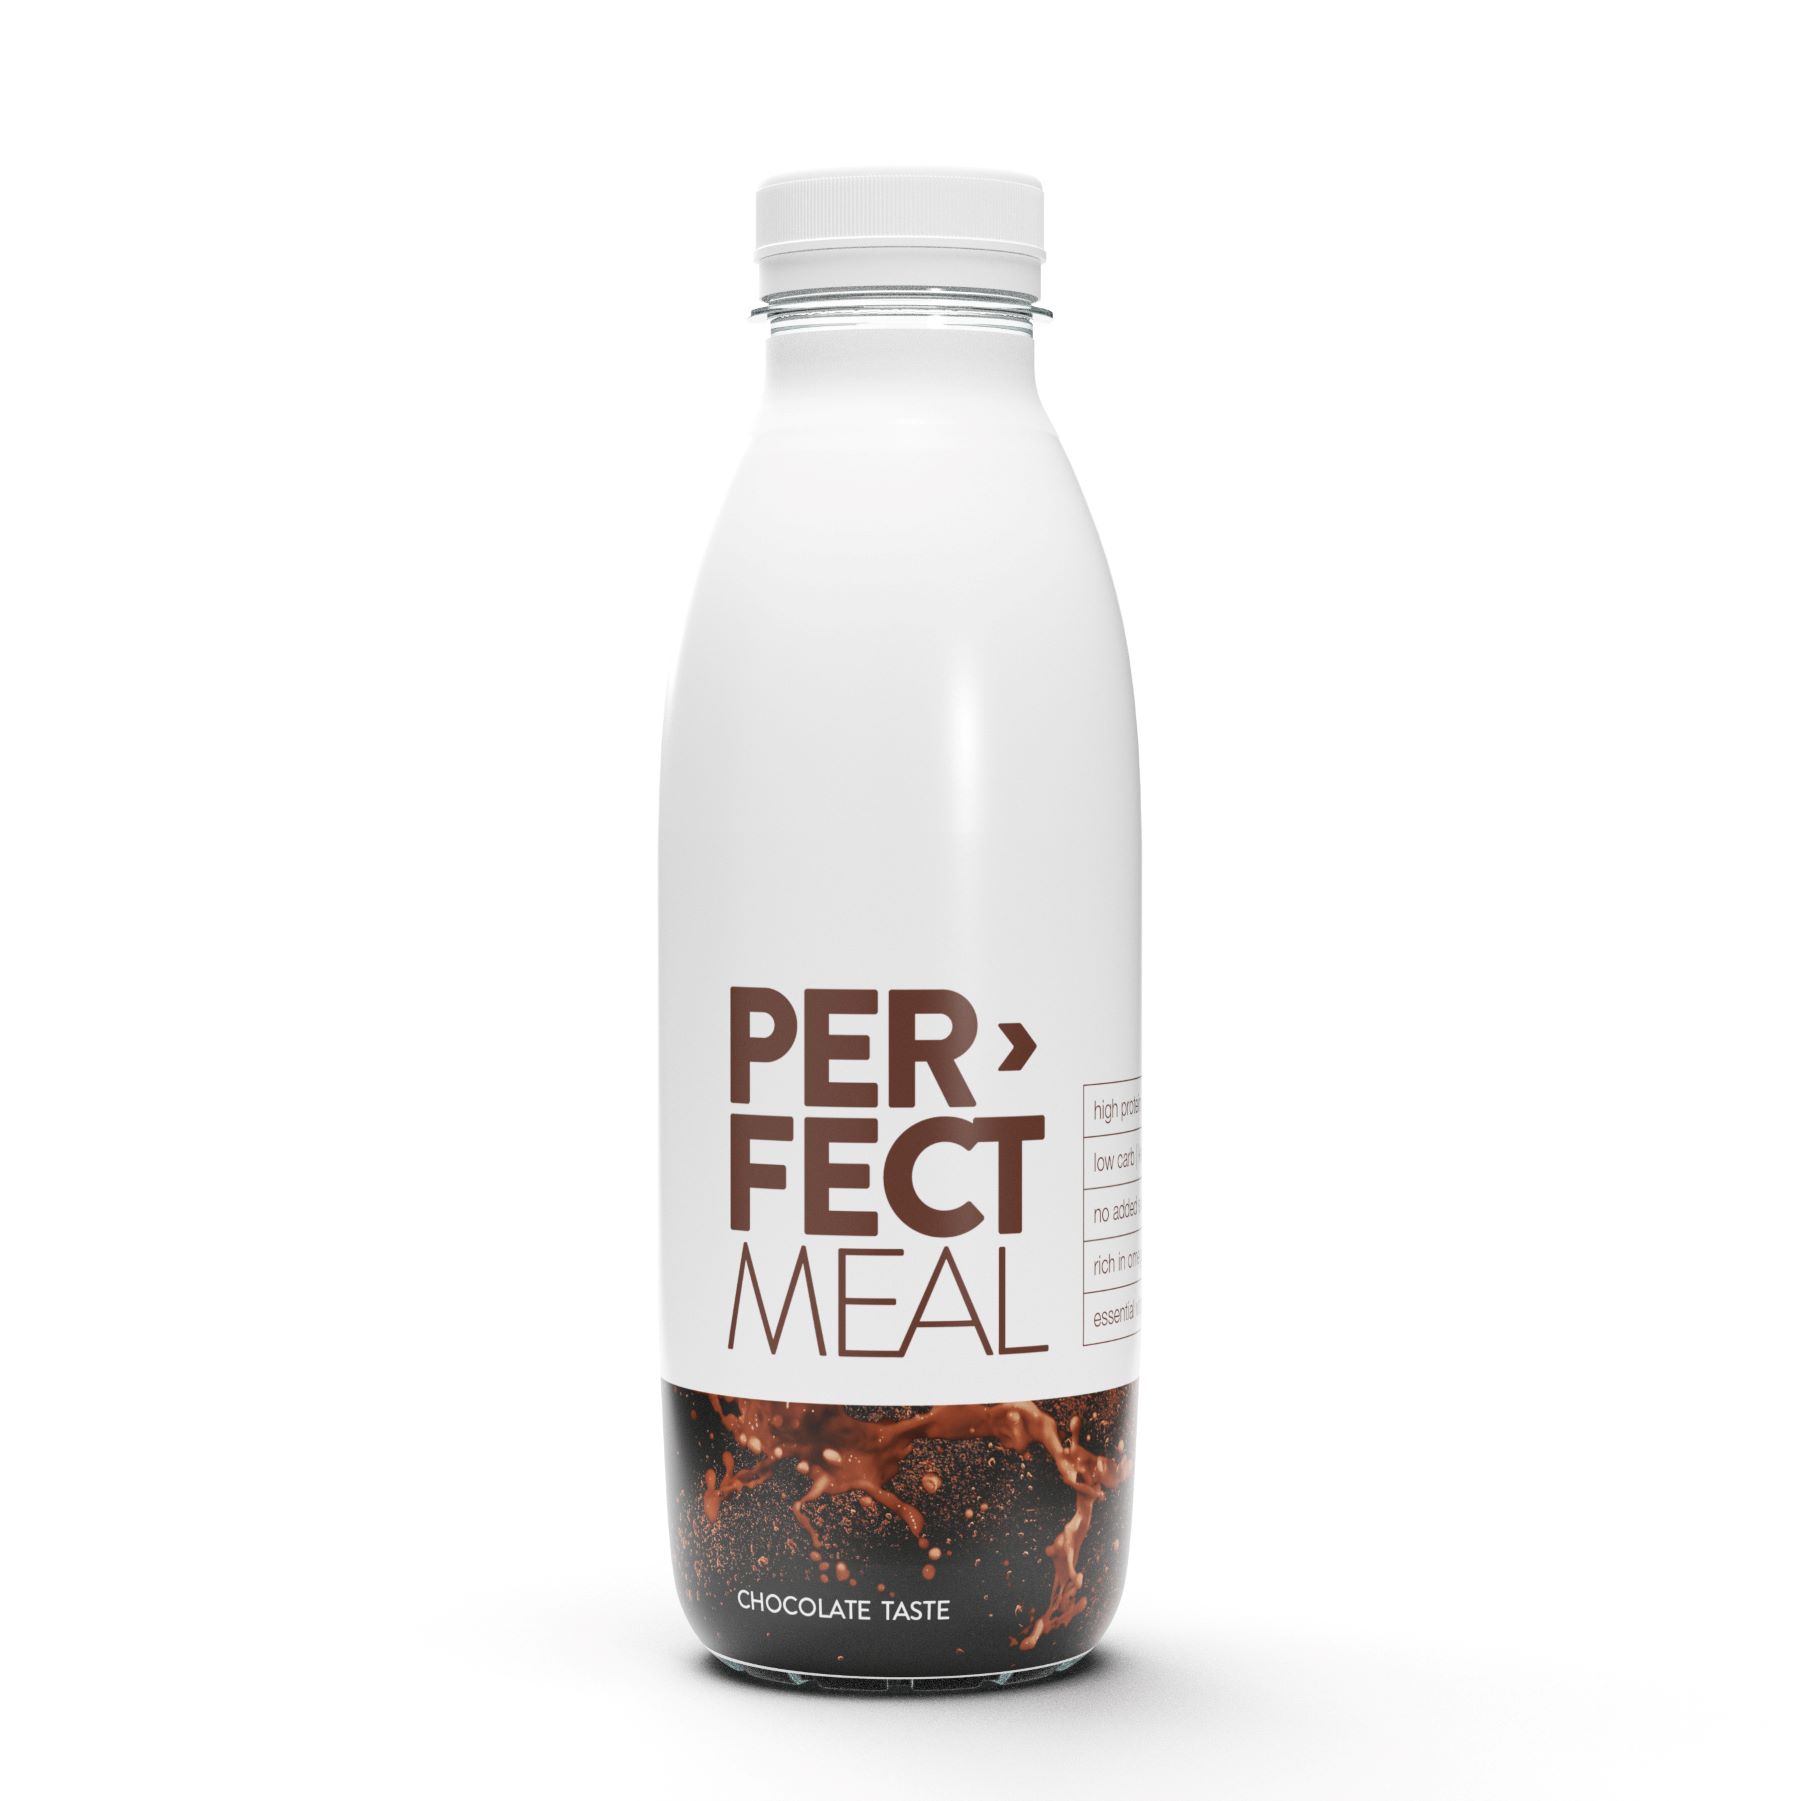 Produktbild PERFECT MEAL, Schoko, 6 x 500 ml